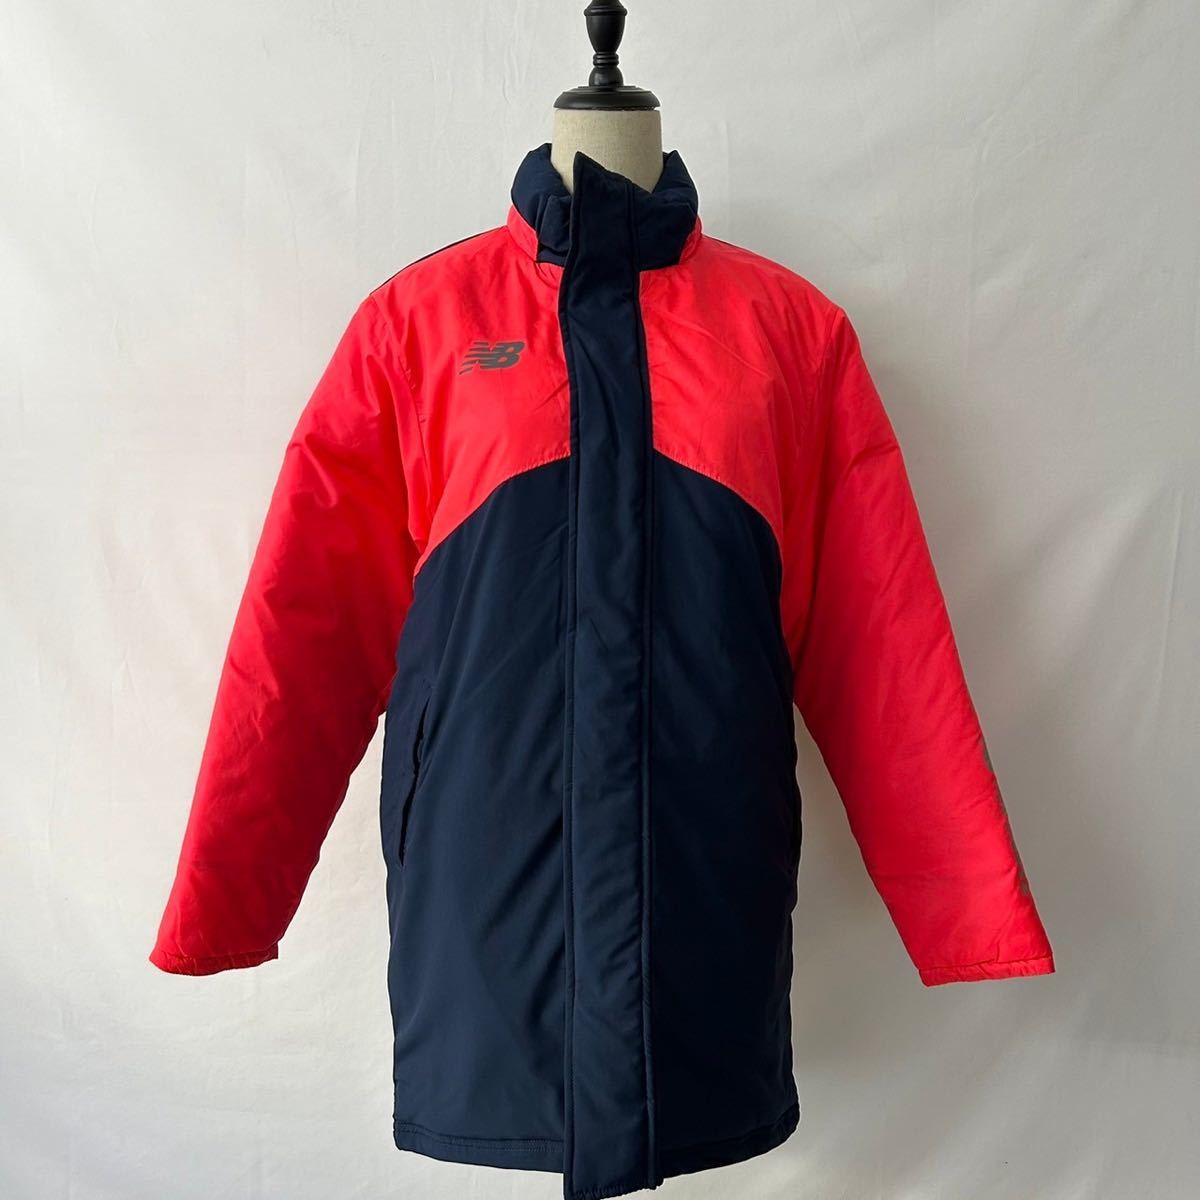 NEWBalance New balance hood less bench coat size160 sport cotton inside jacket 